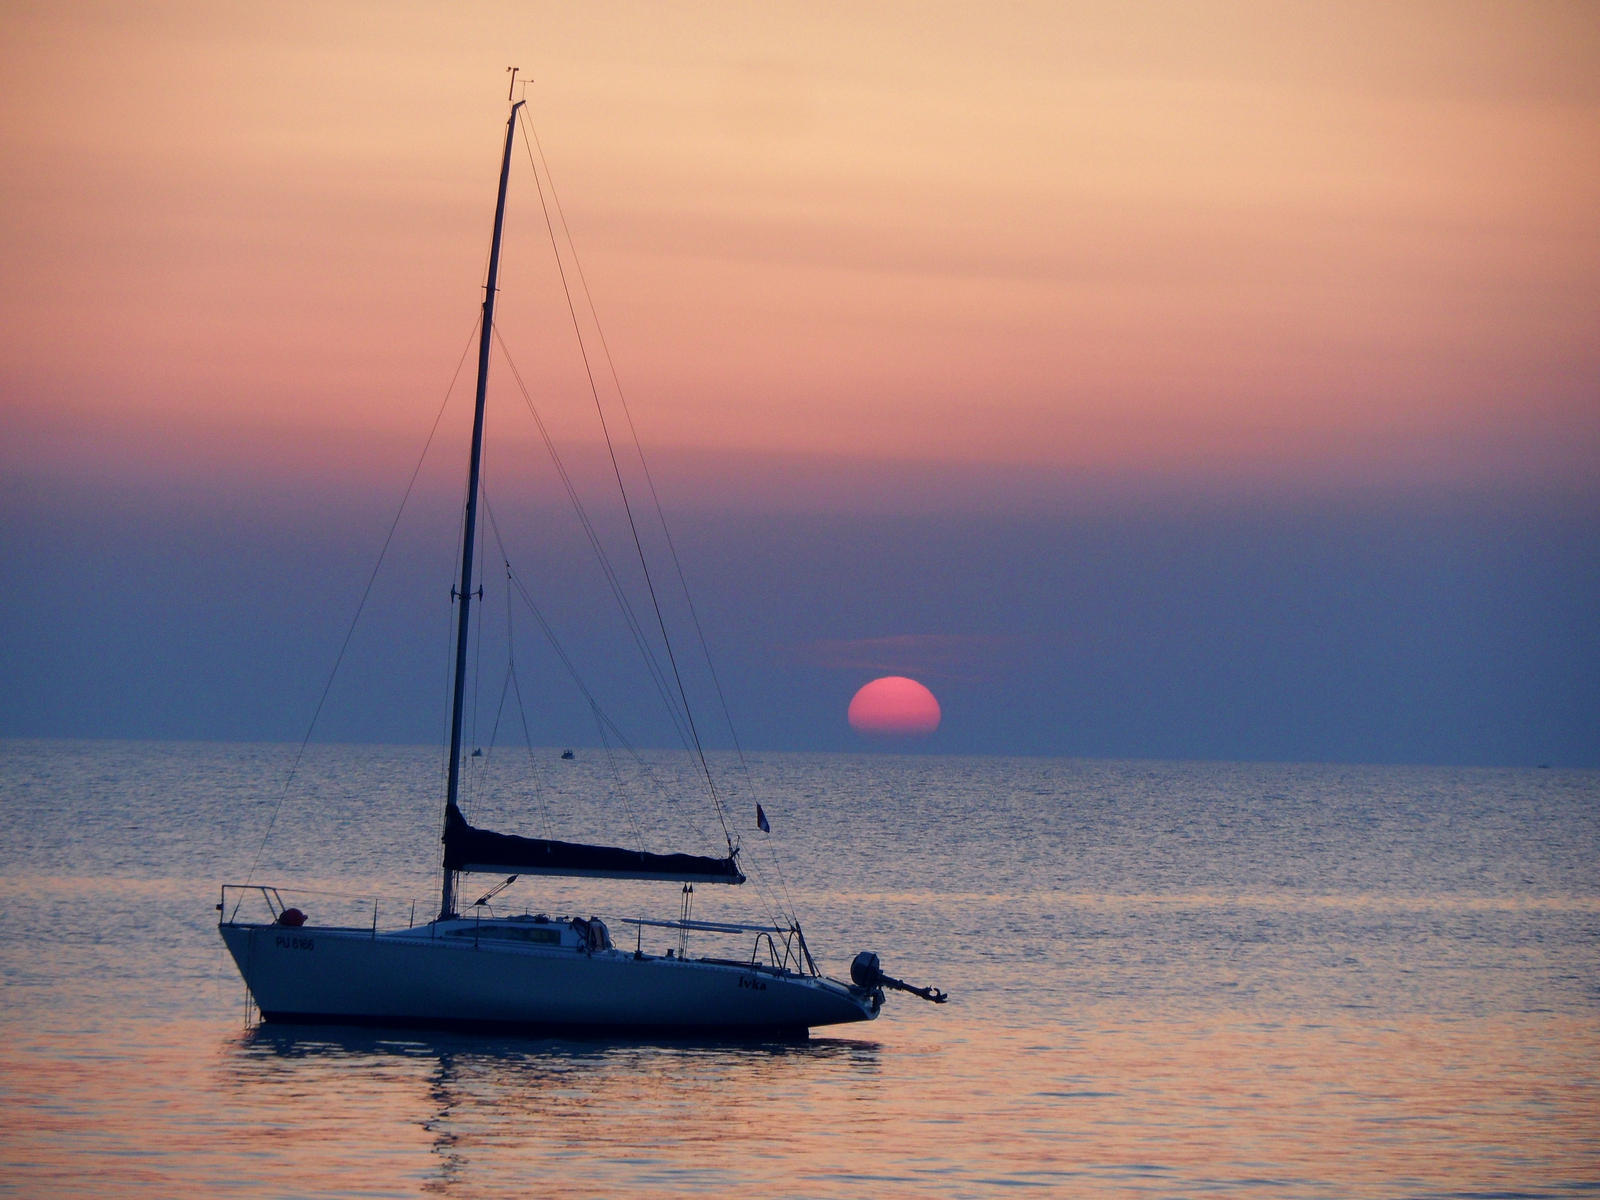 Boat under the setting sun